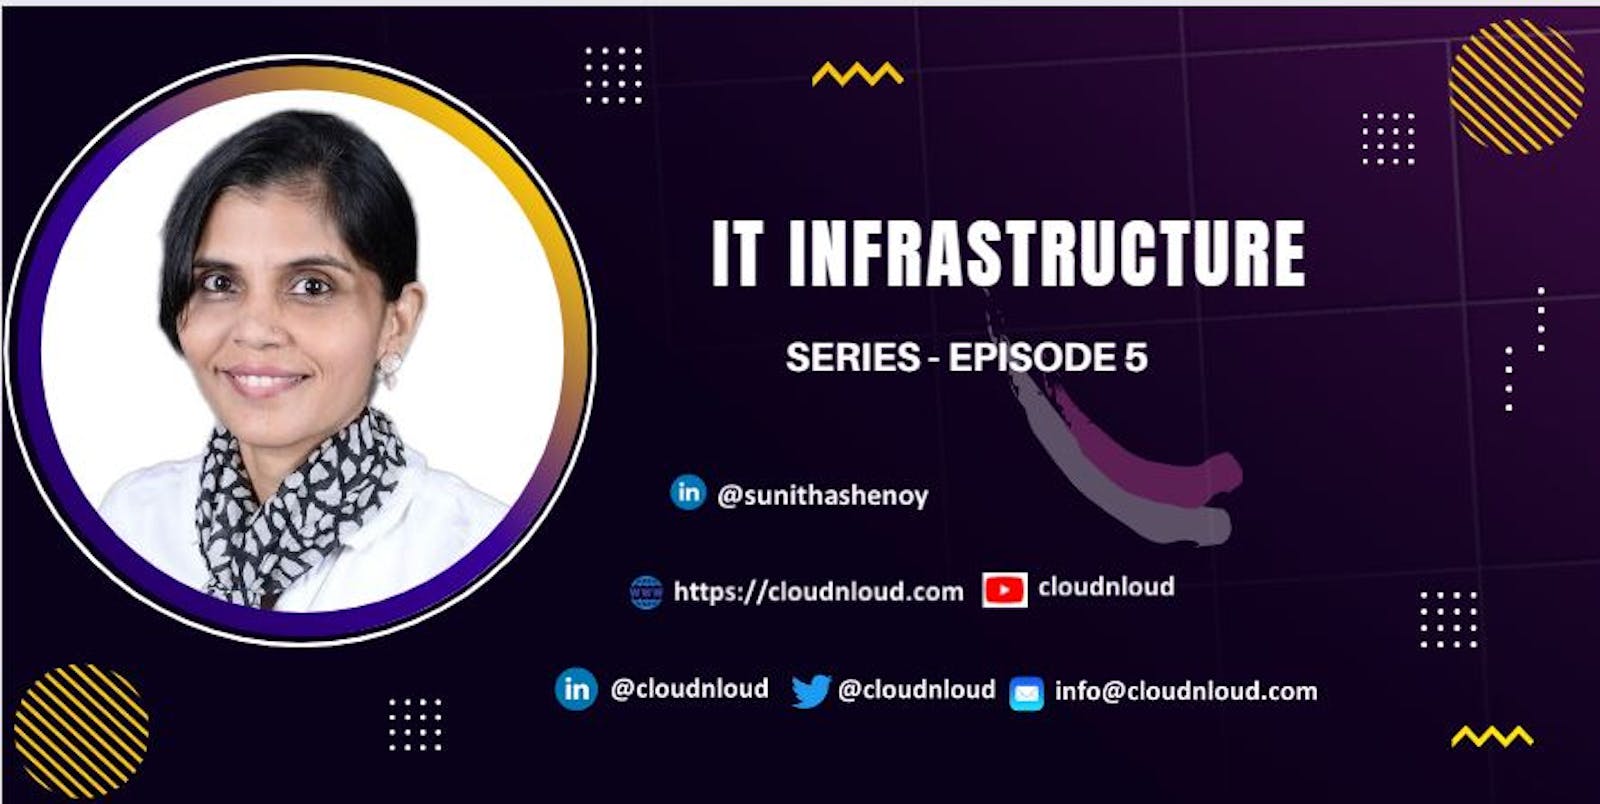 IT Infrastructure Series Episode 5